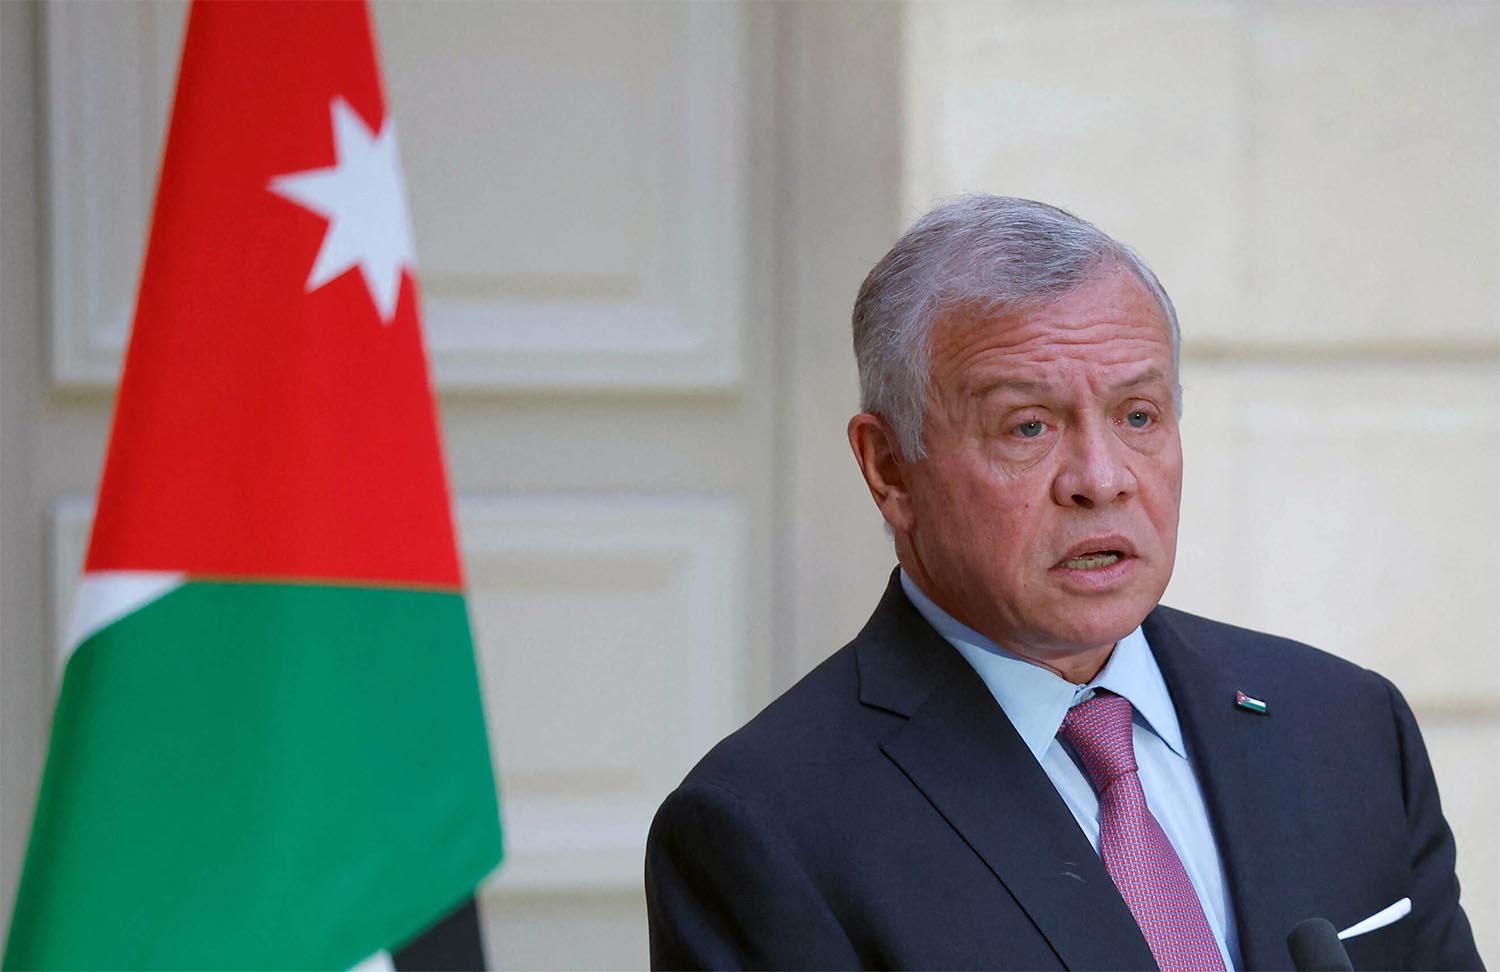 Jordan's King Abdullah